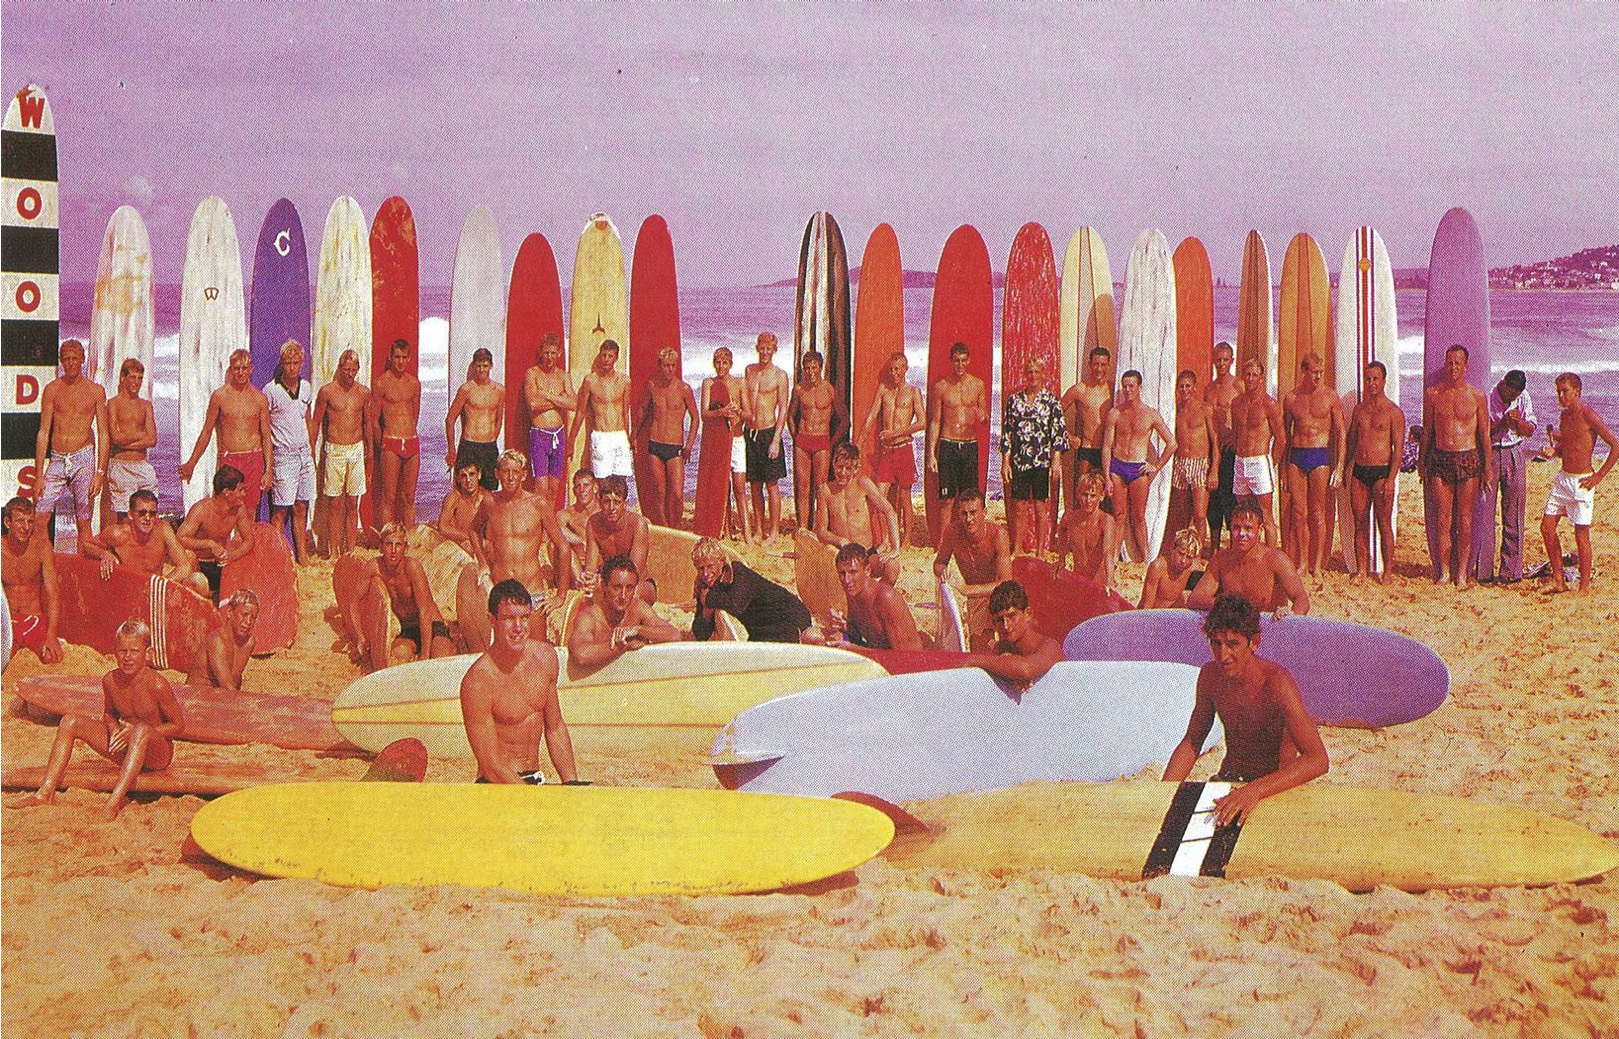 "THE SURF SHOP DEE WHY AUSTRALIA 1960s Sticker Decal LONGBOARD Surfing Surfboard 